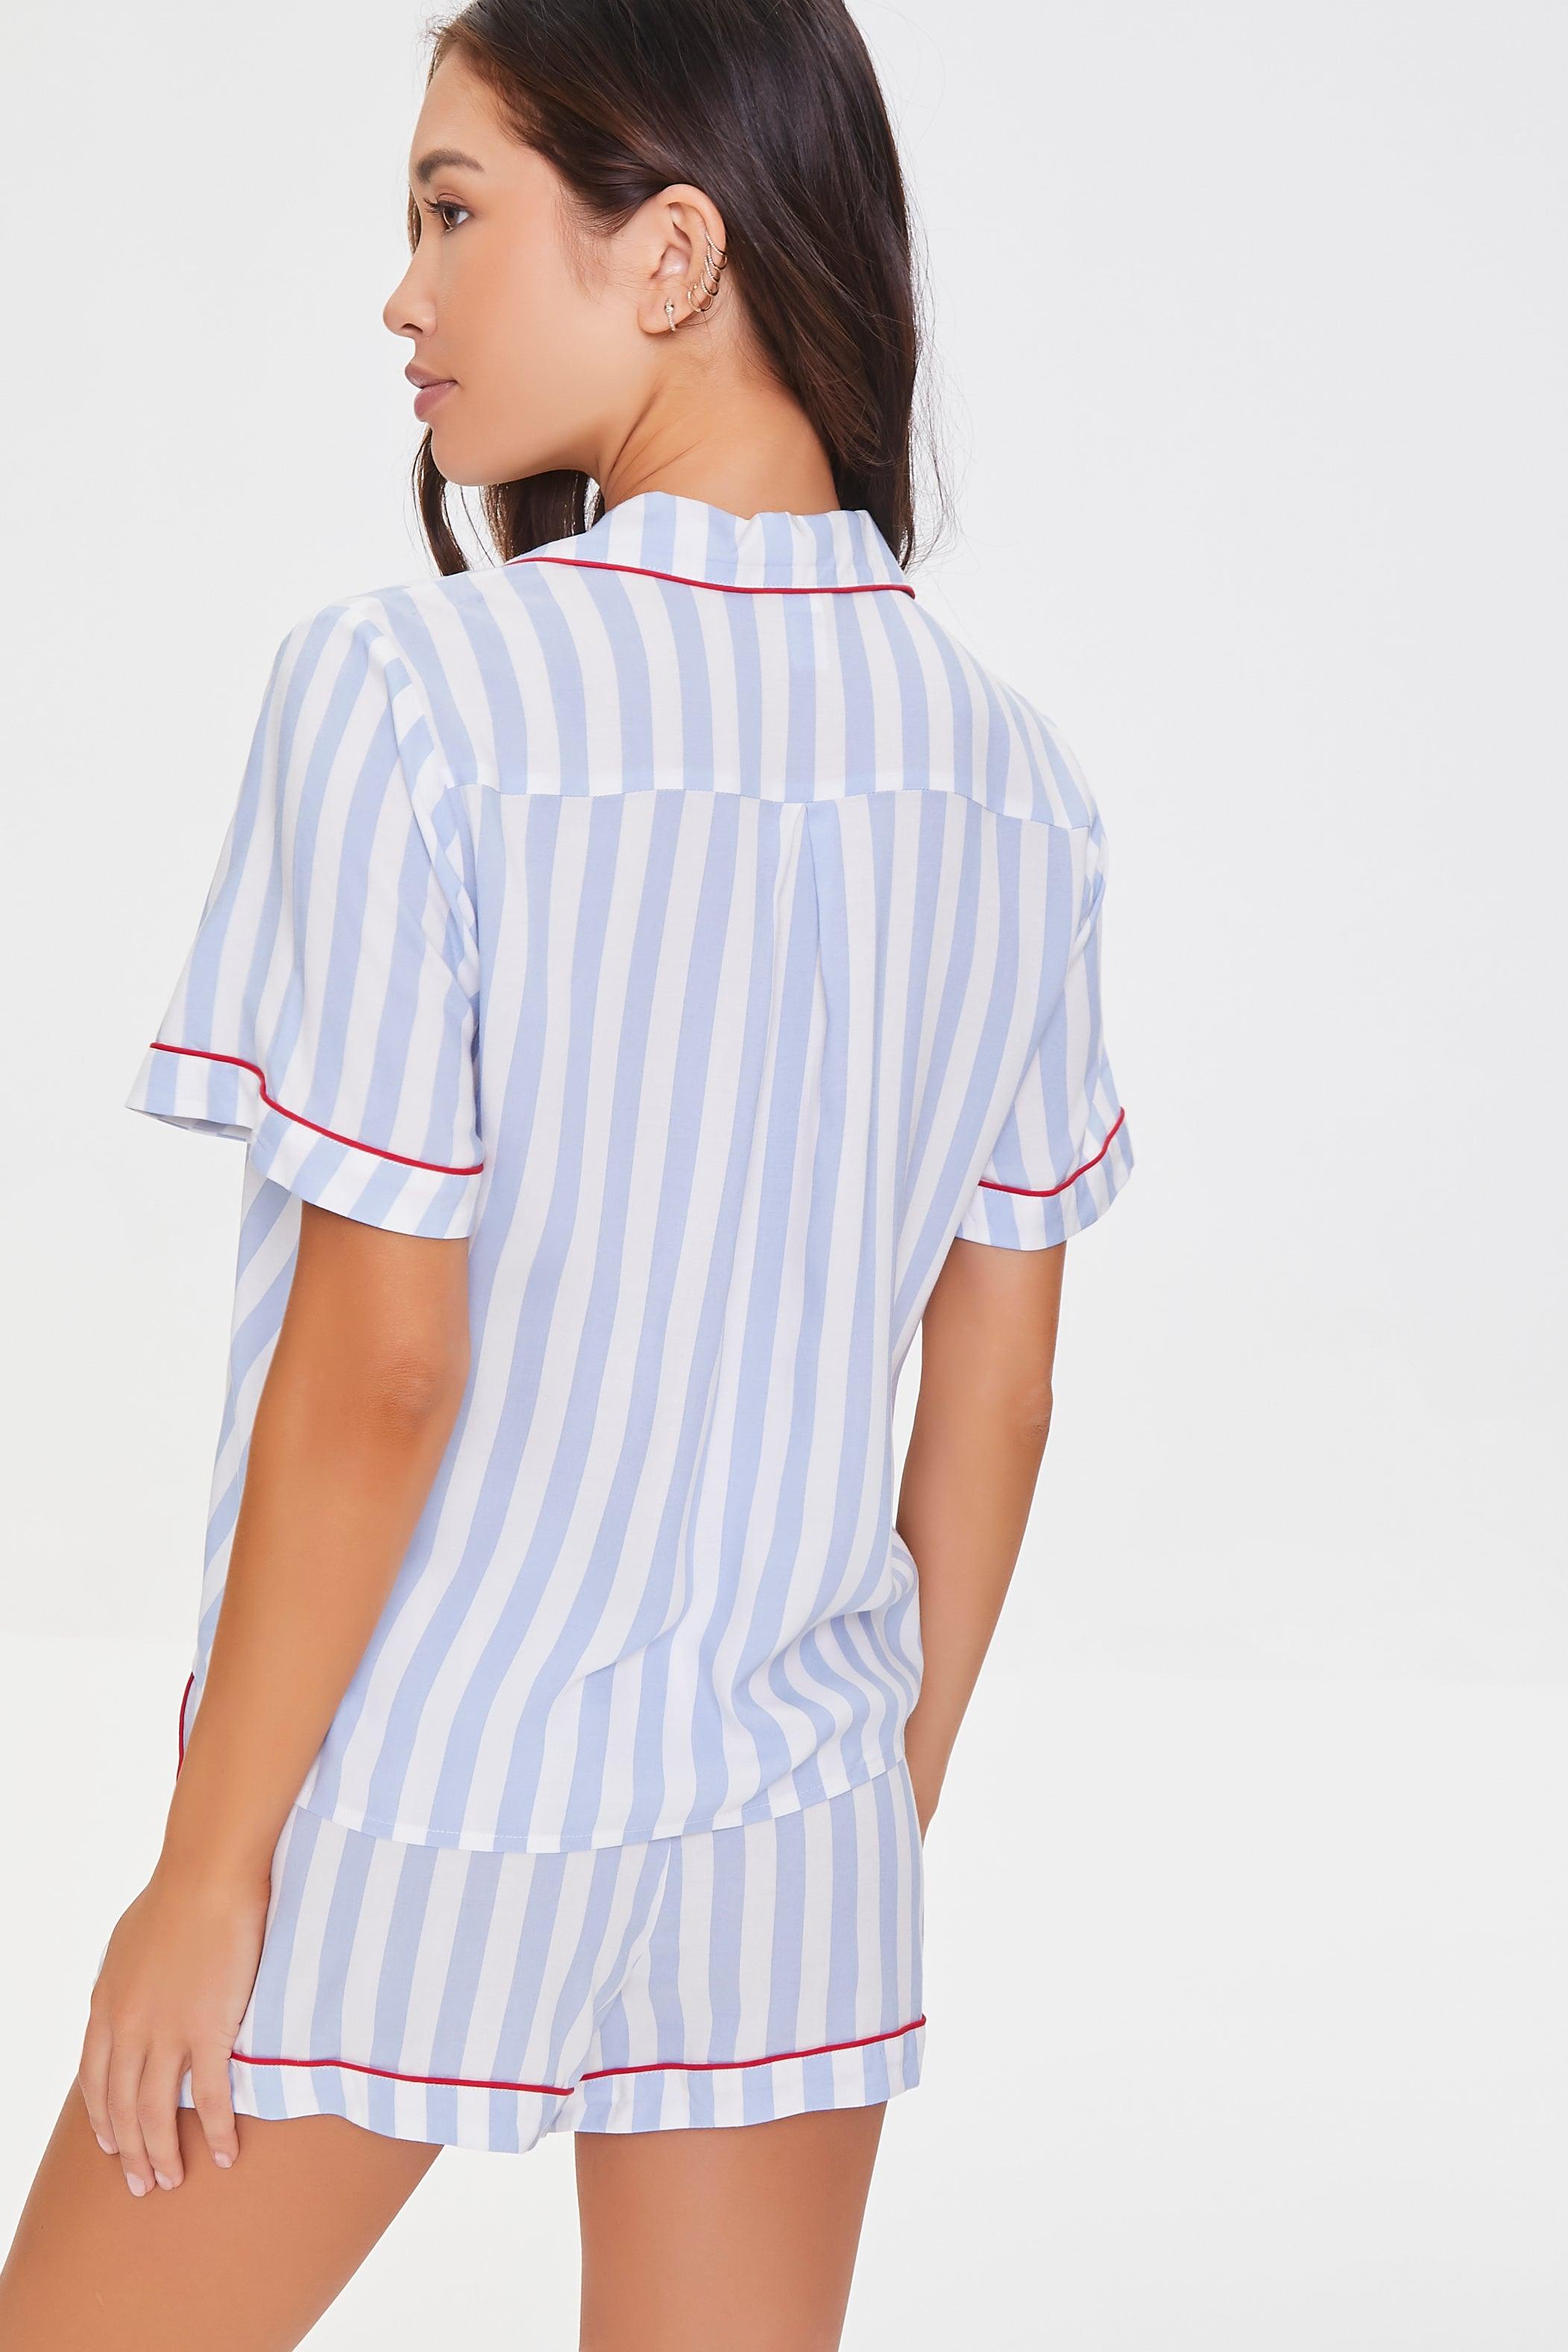 Cloudwhite Floral Striped Shirt & Shorts Pajama Set 5